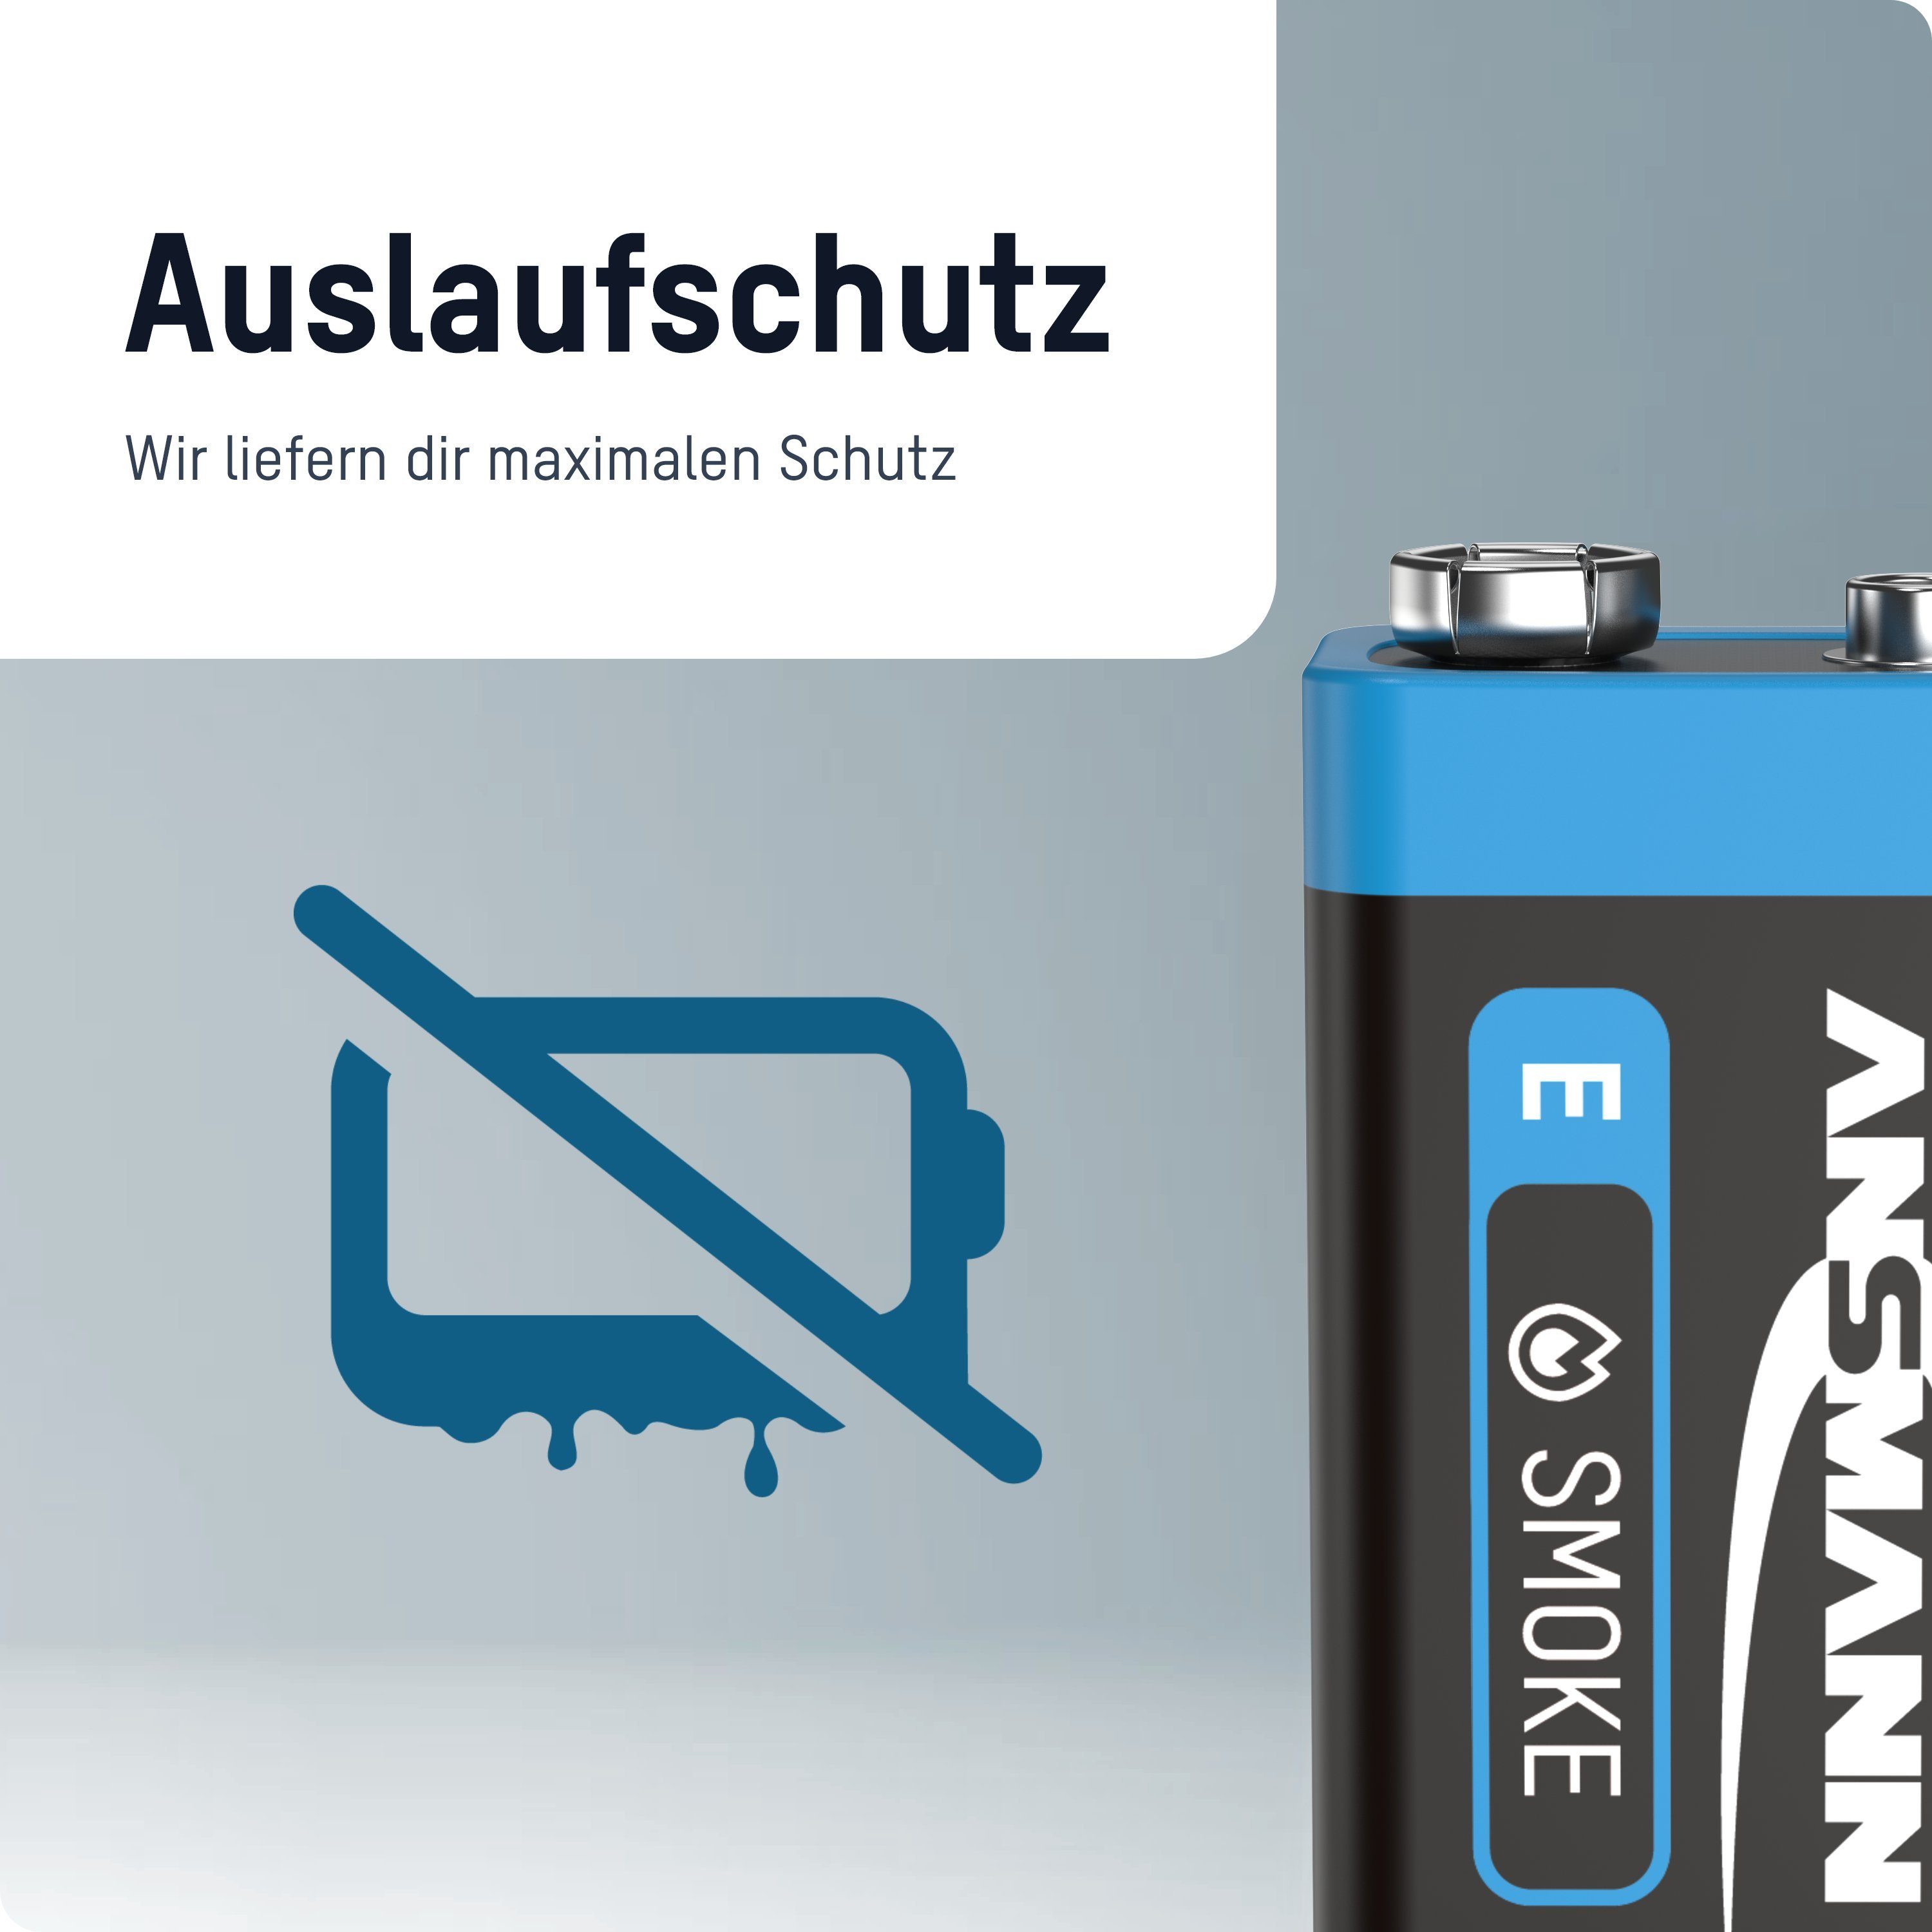 Rauchmelder Lithium Block longlife ANSMANN® 4x Batterien Premium - Batterie 9V Qualität